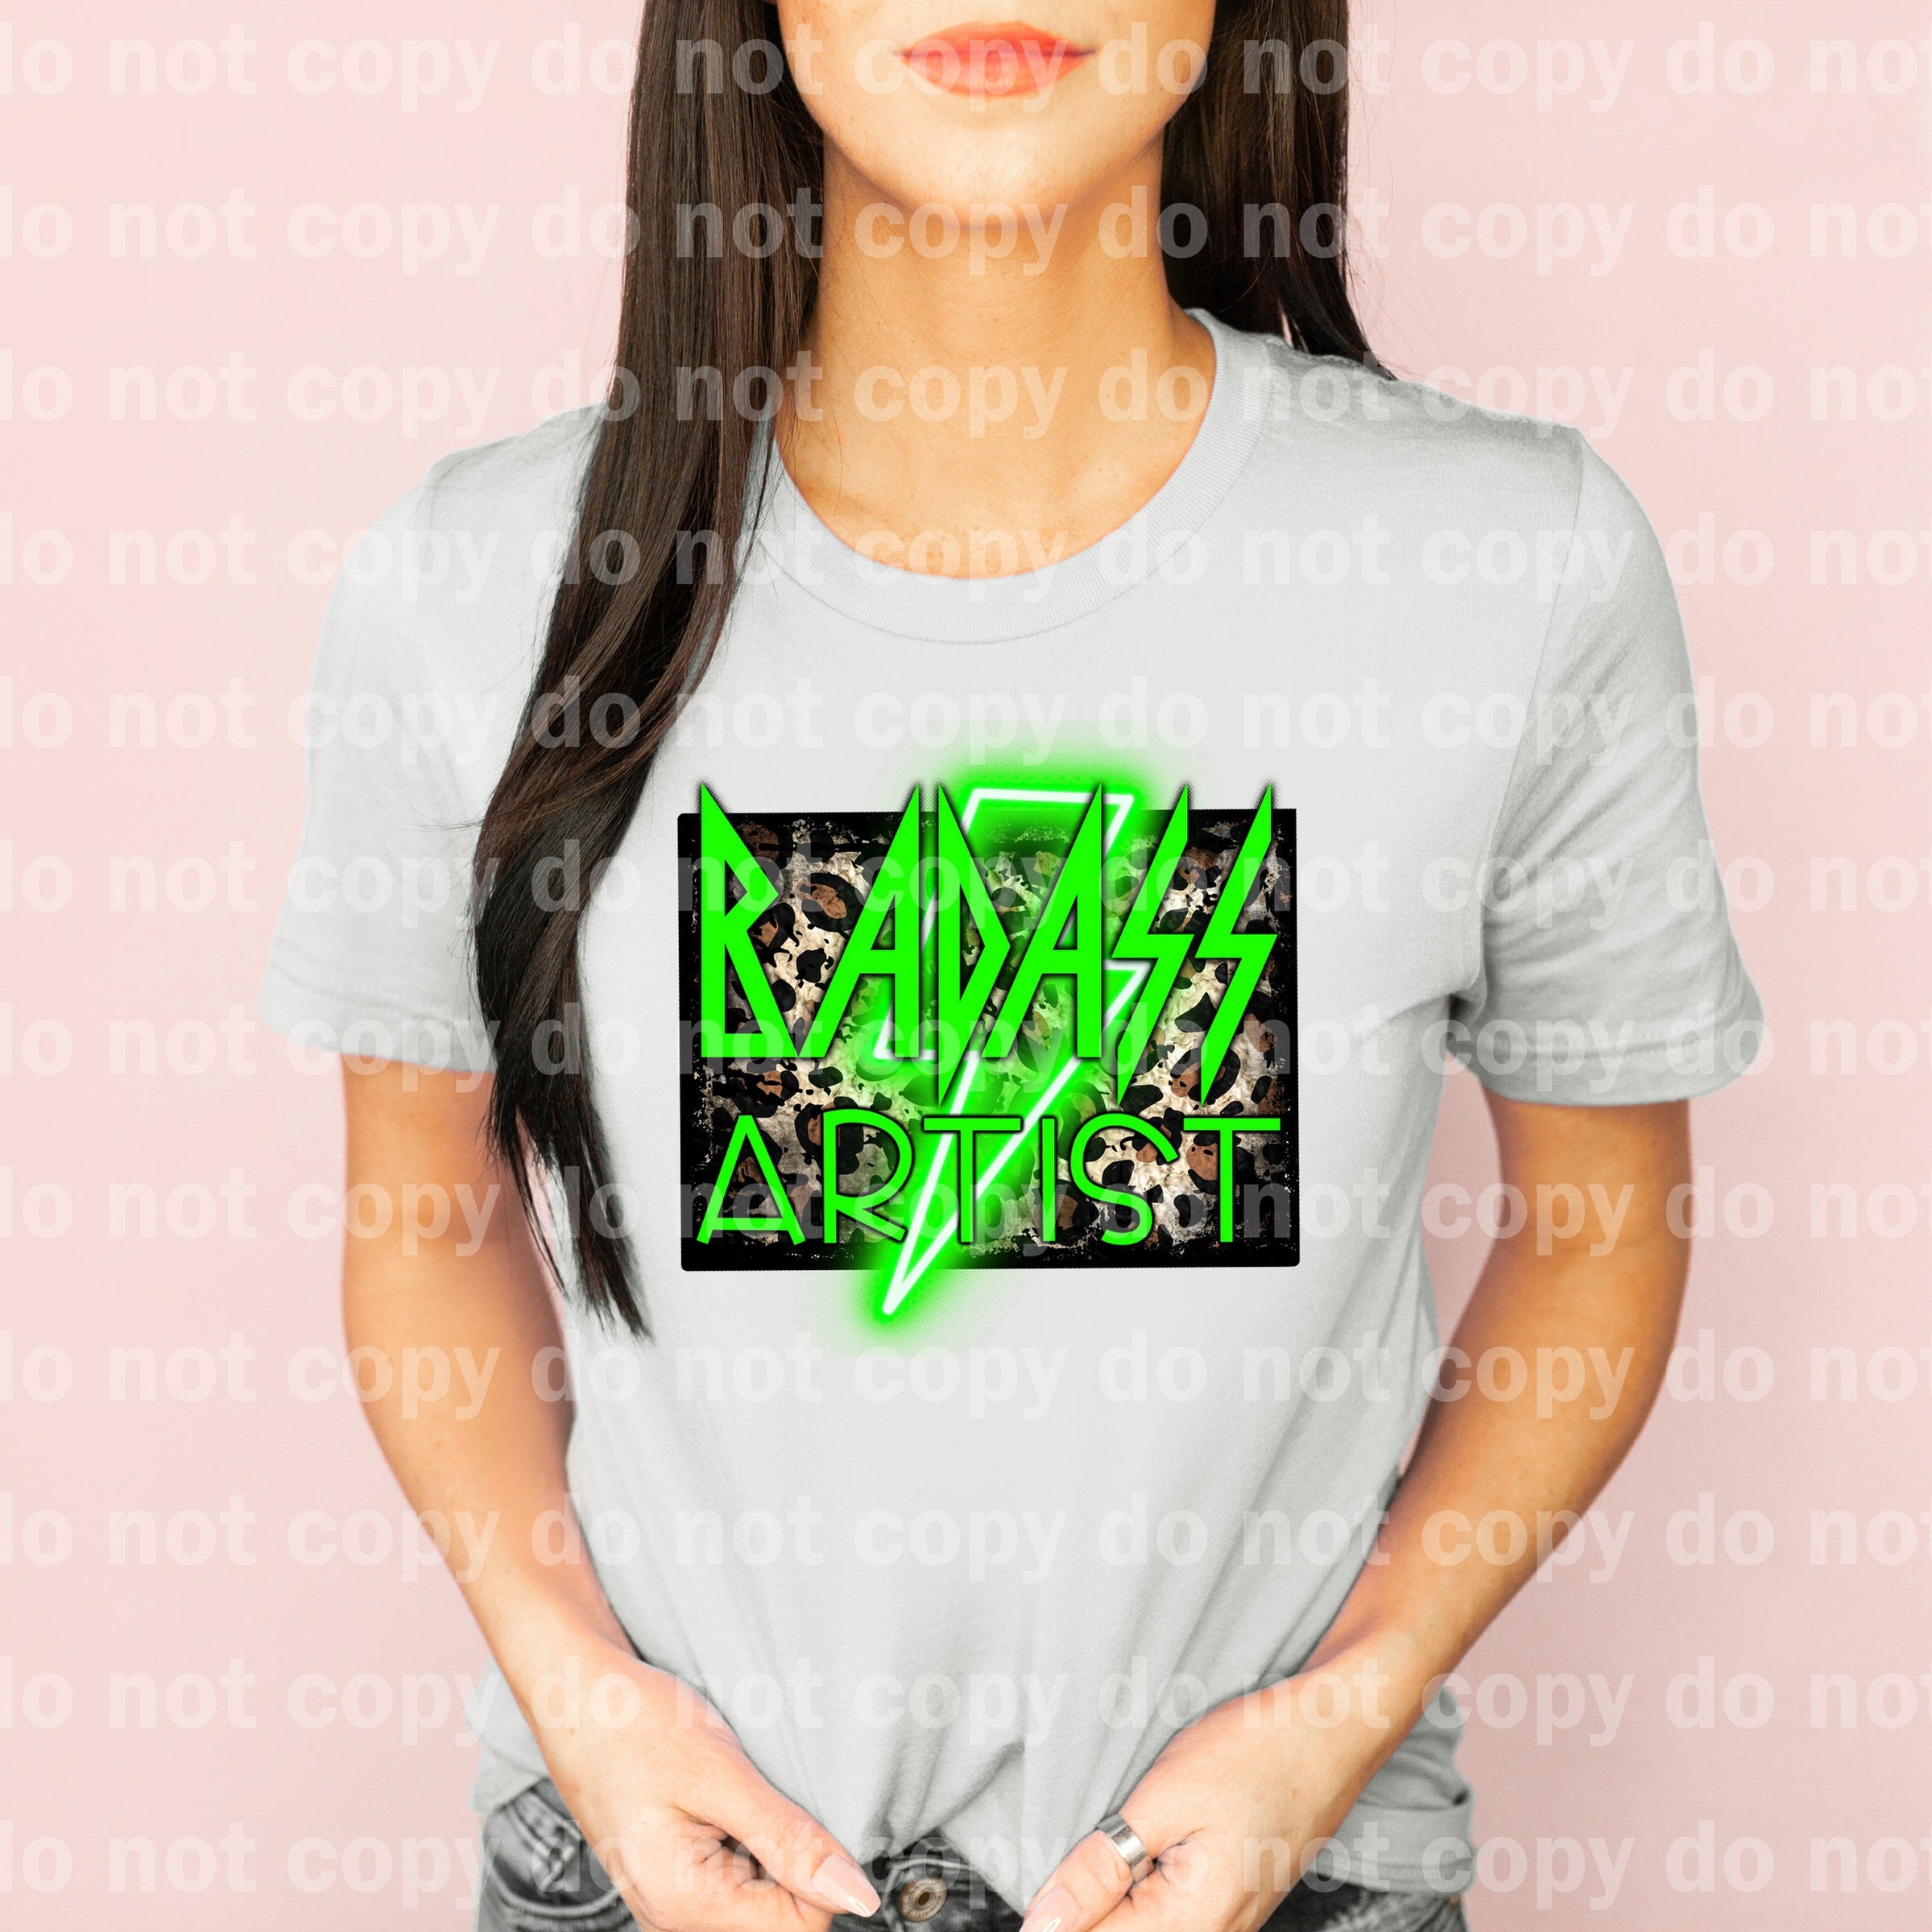 Badass Shirt Maker Neon Green Dream Print or Sublimation Print